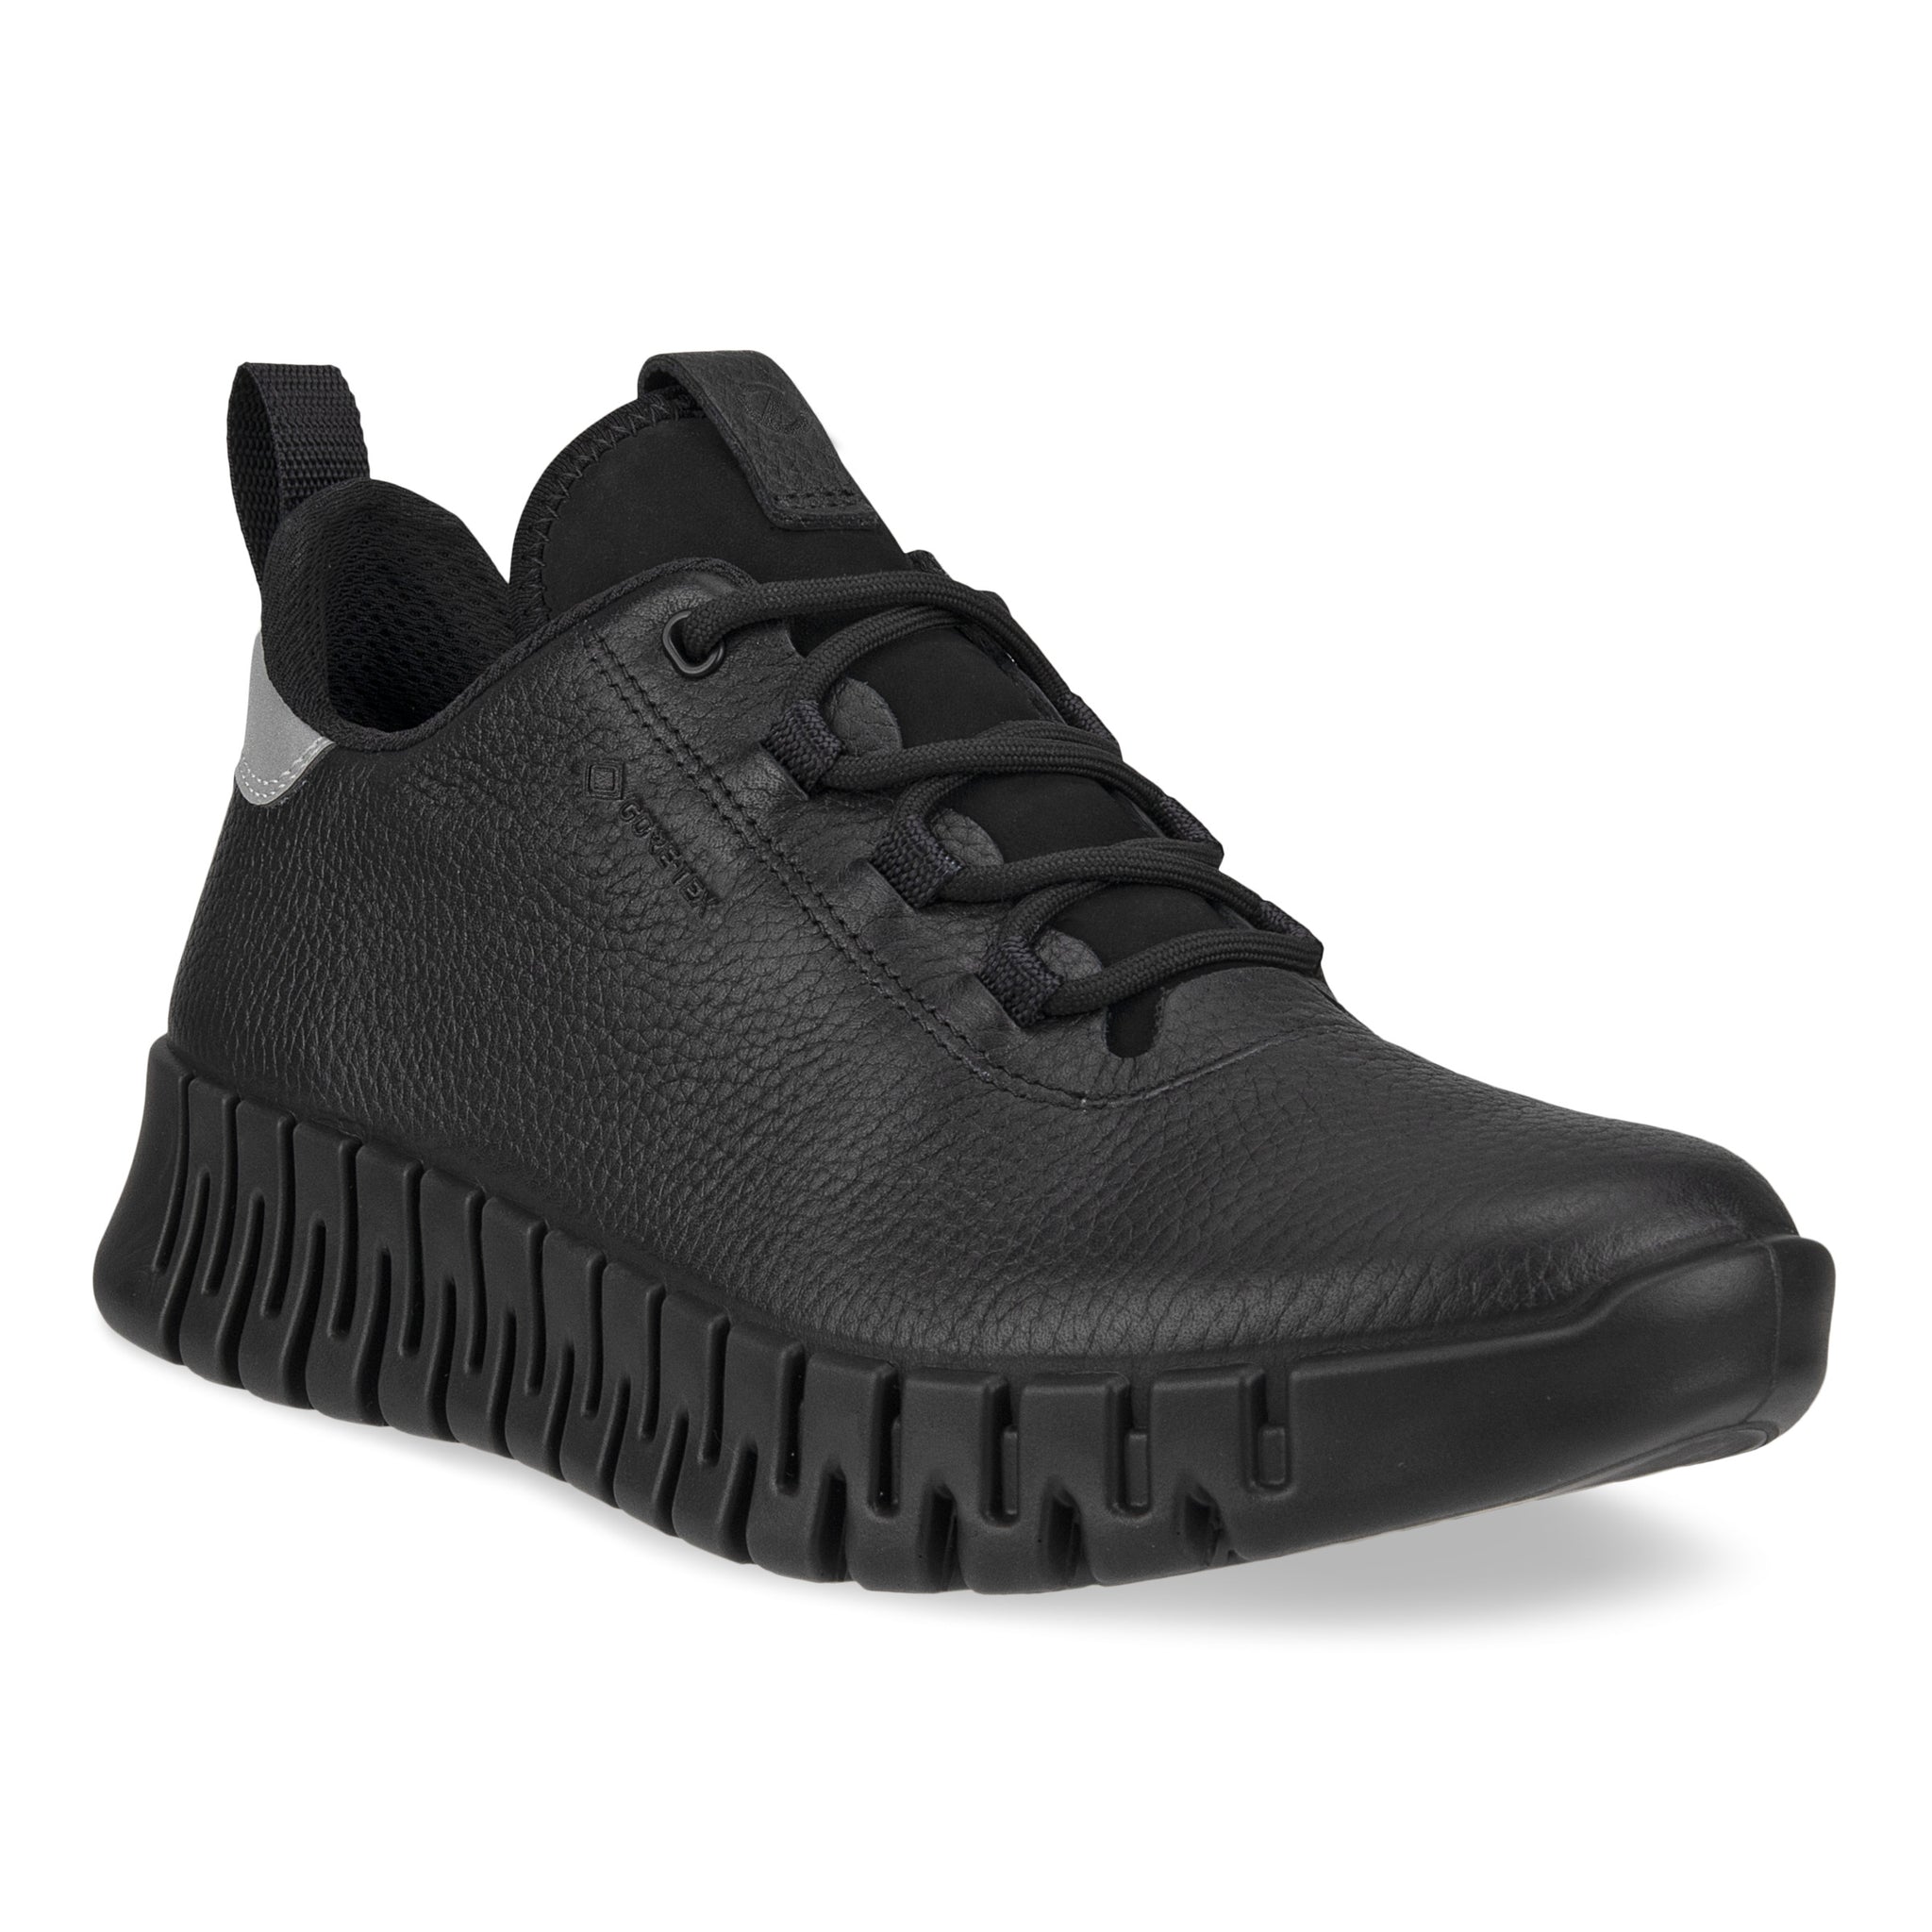 ECCO Gruuv (525224) - Mens Lace Goretex Shoe in Black. Ecco Shoes | Wisemans | Bantry | West Cork | Ireland